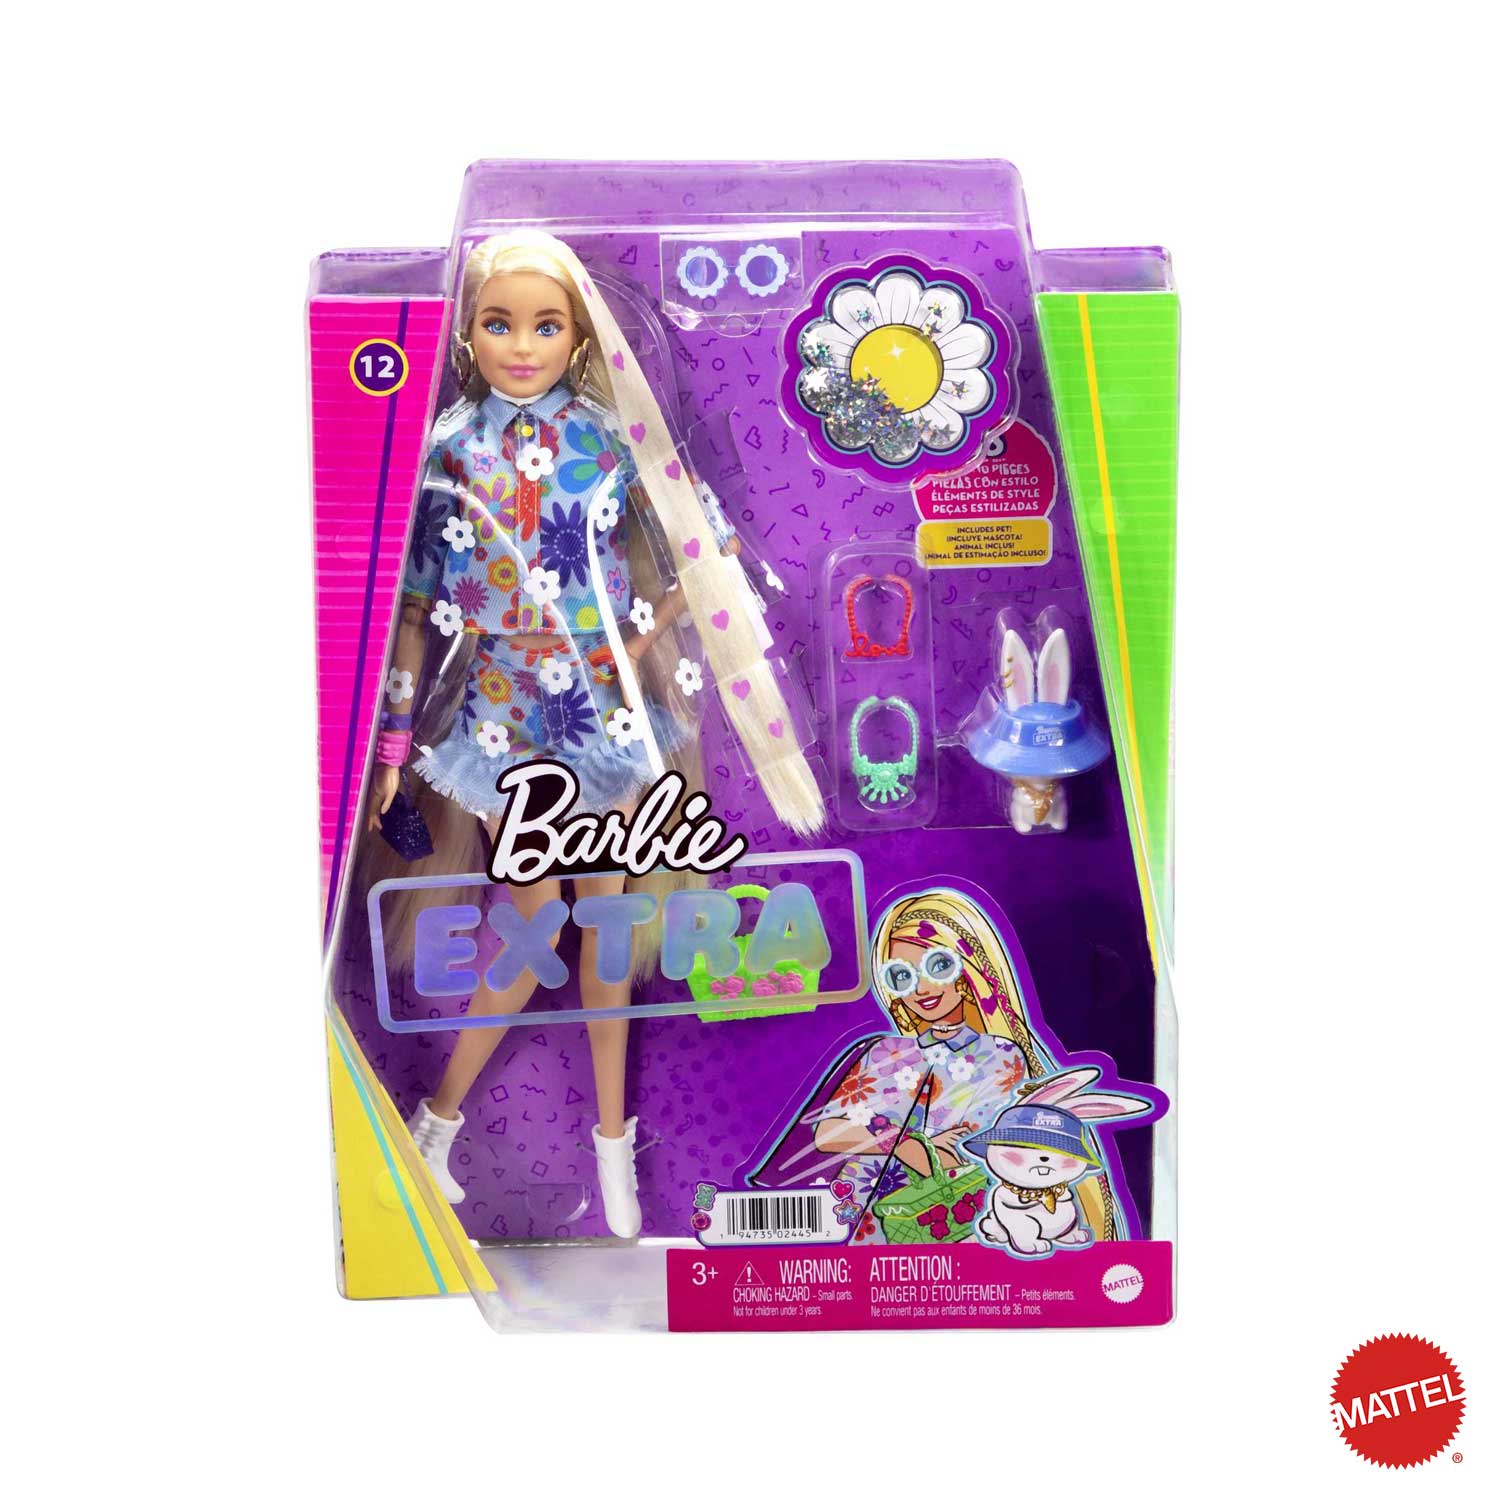 Mattel - Barbie Extra assortite GRN27 – Iperbimbo